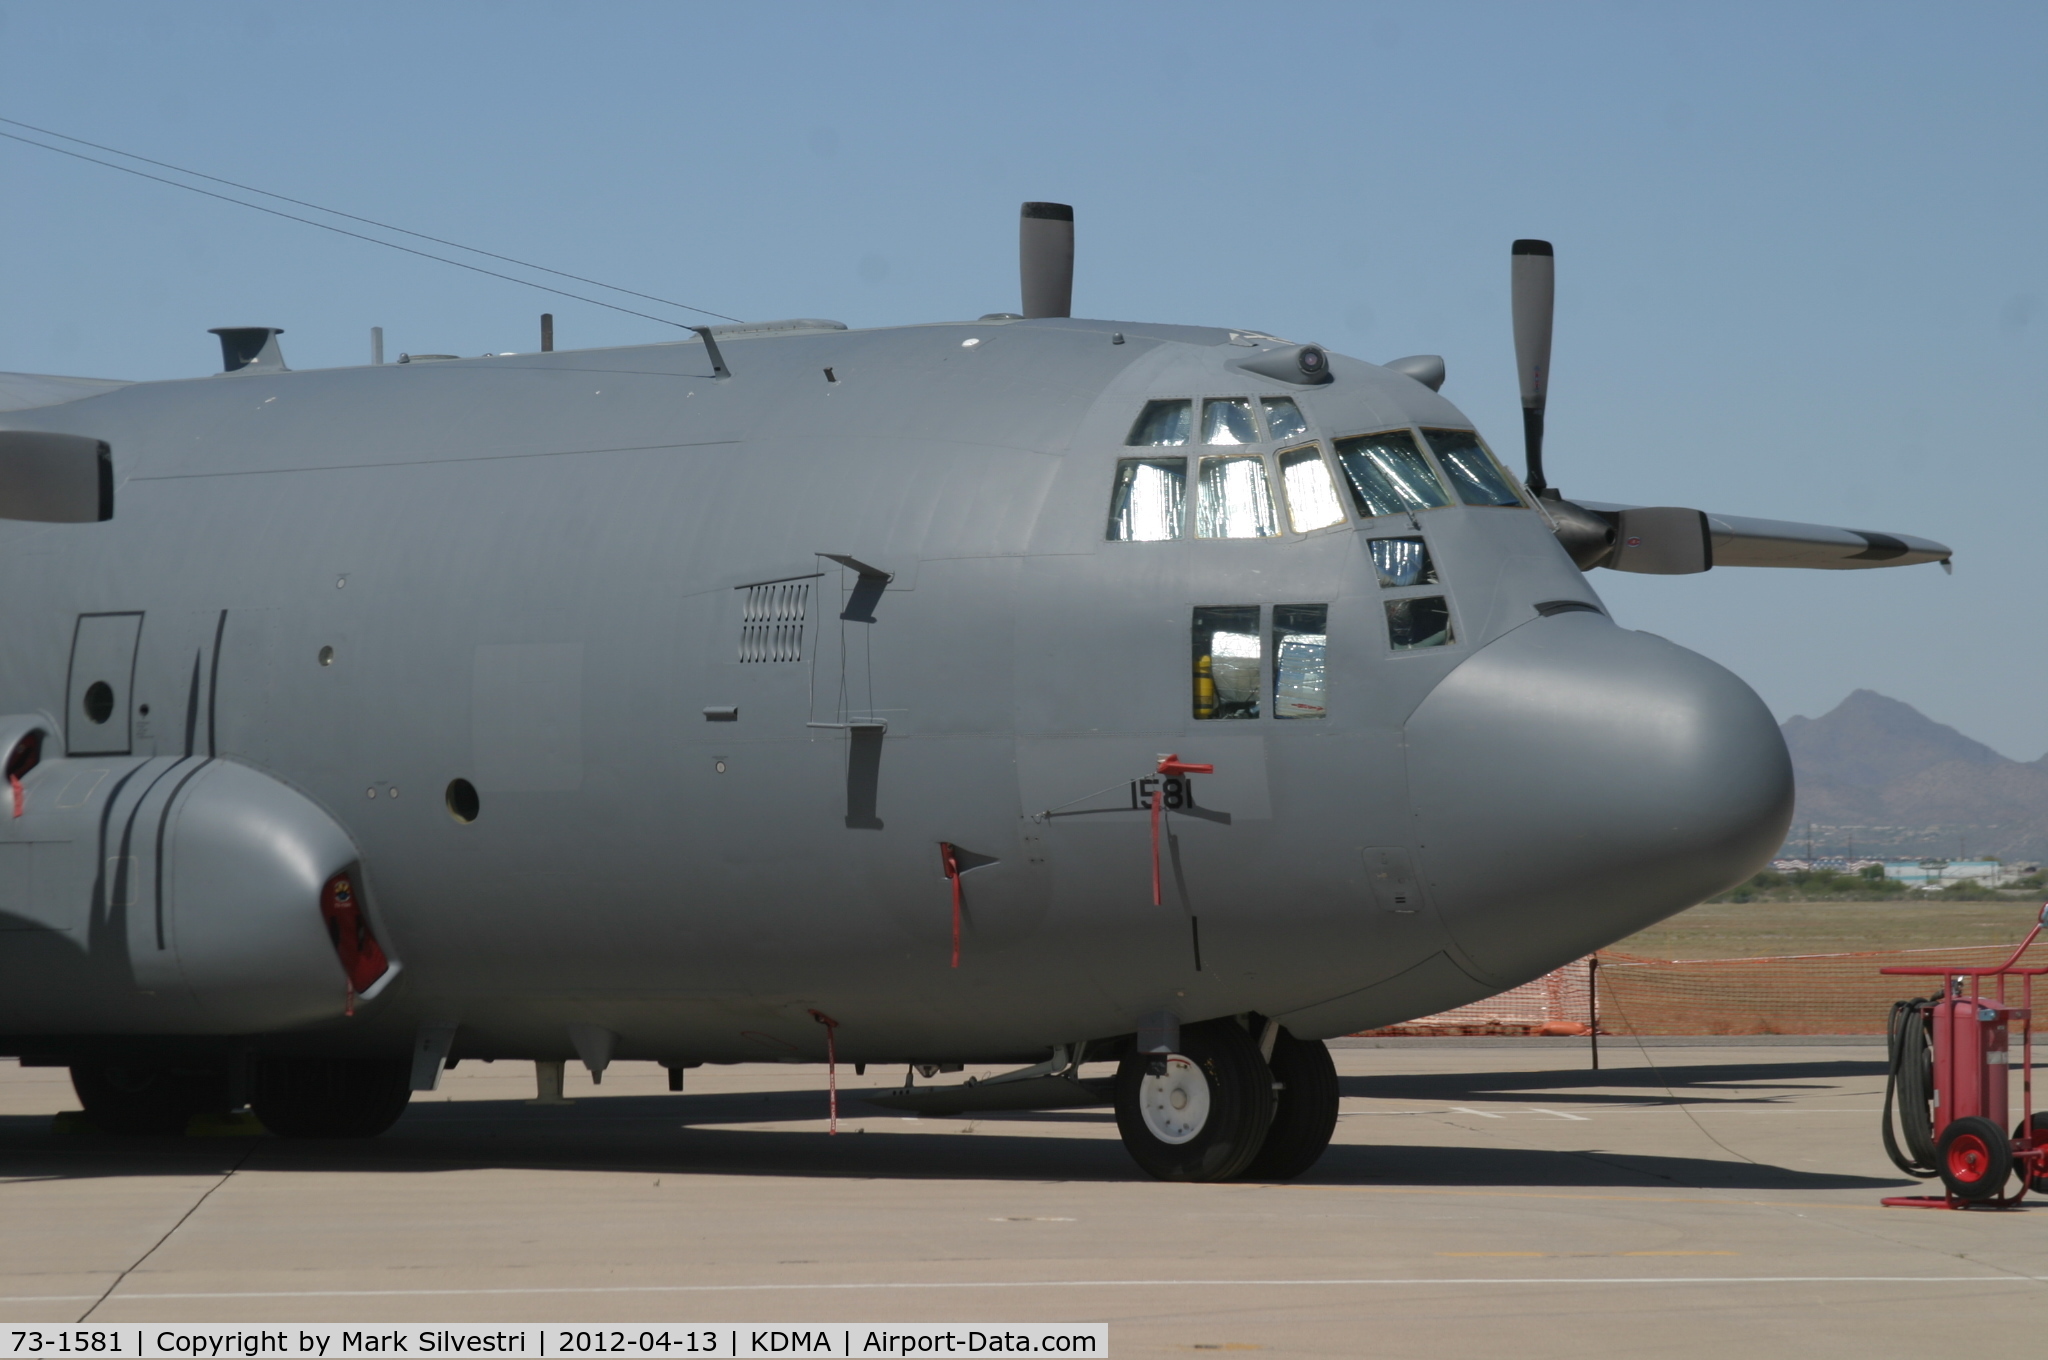 73-1581, 1973 Lockheed EC-130H Compass Call C/N 382-4543, Davis Monthan Airshow Practice Day